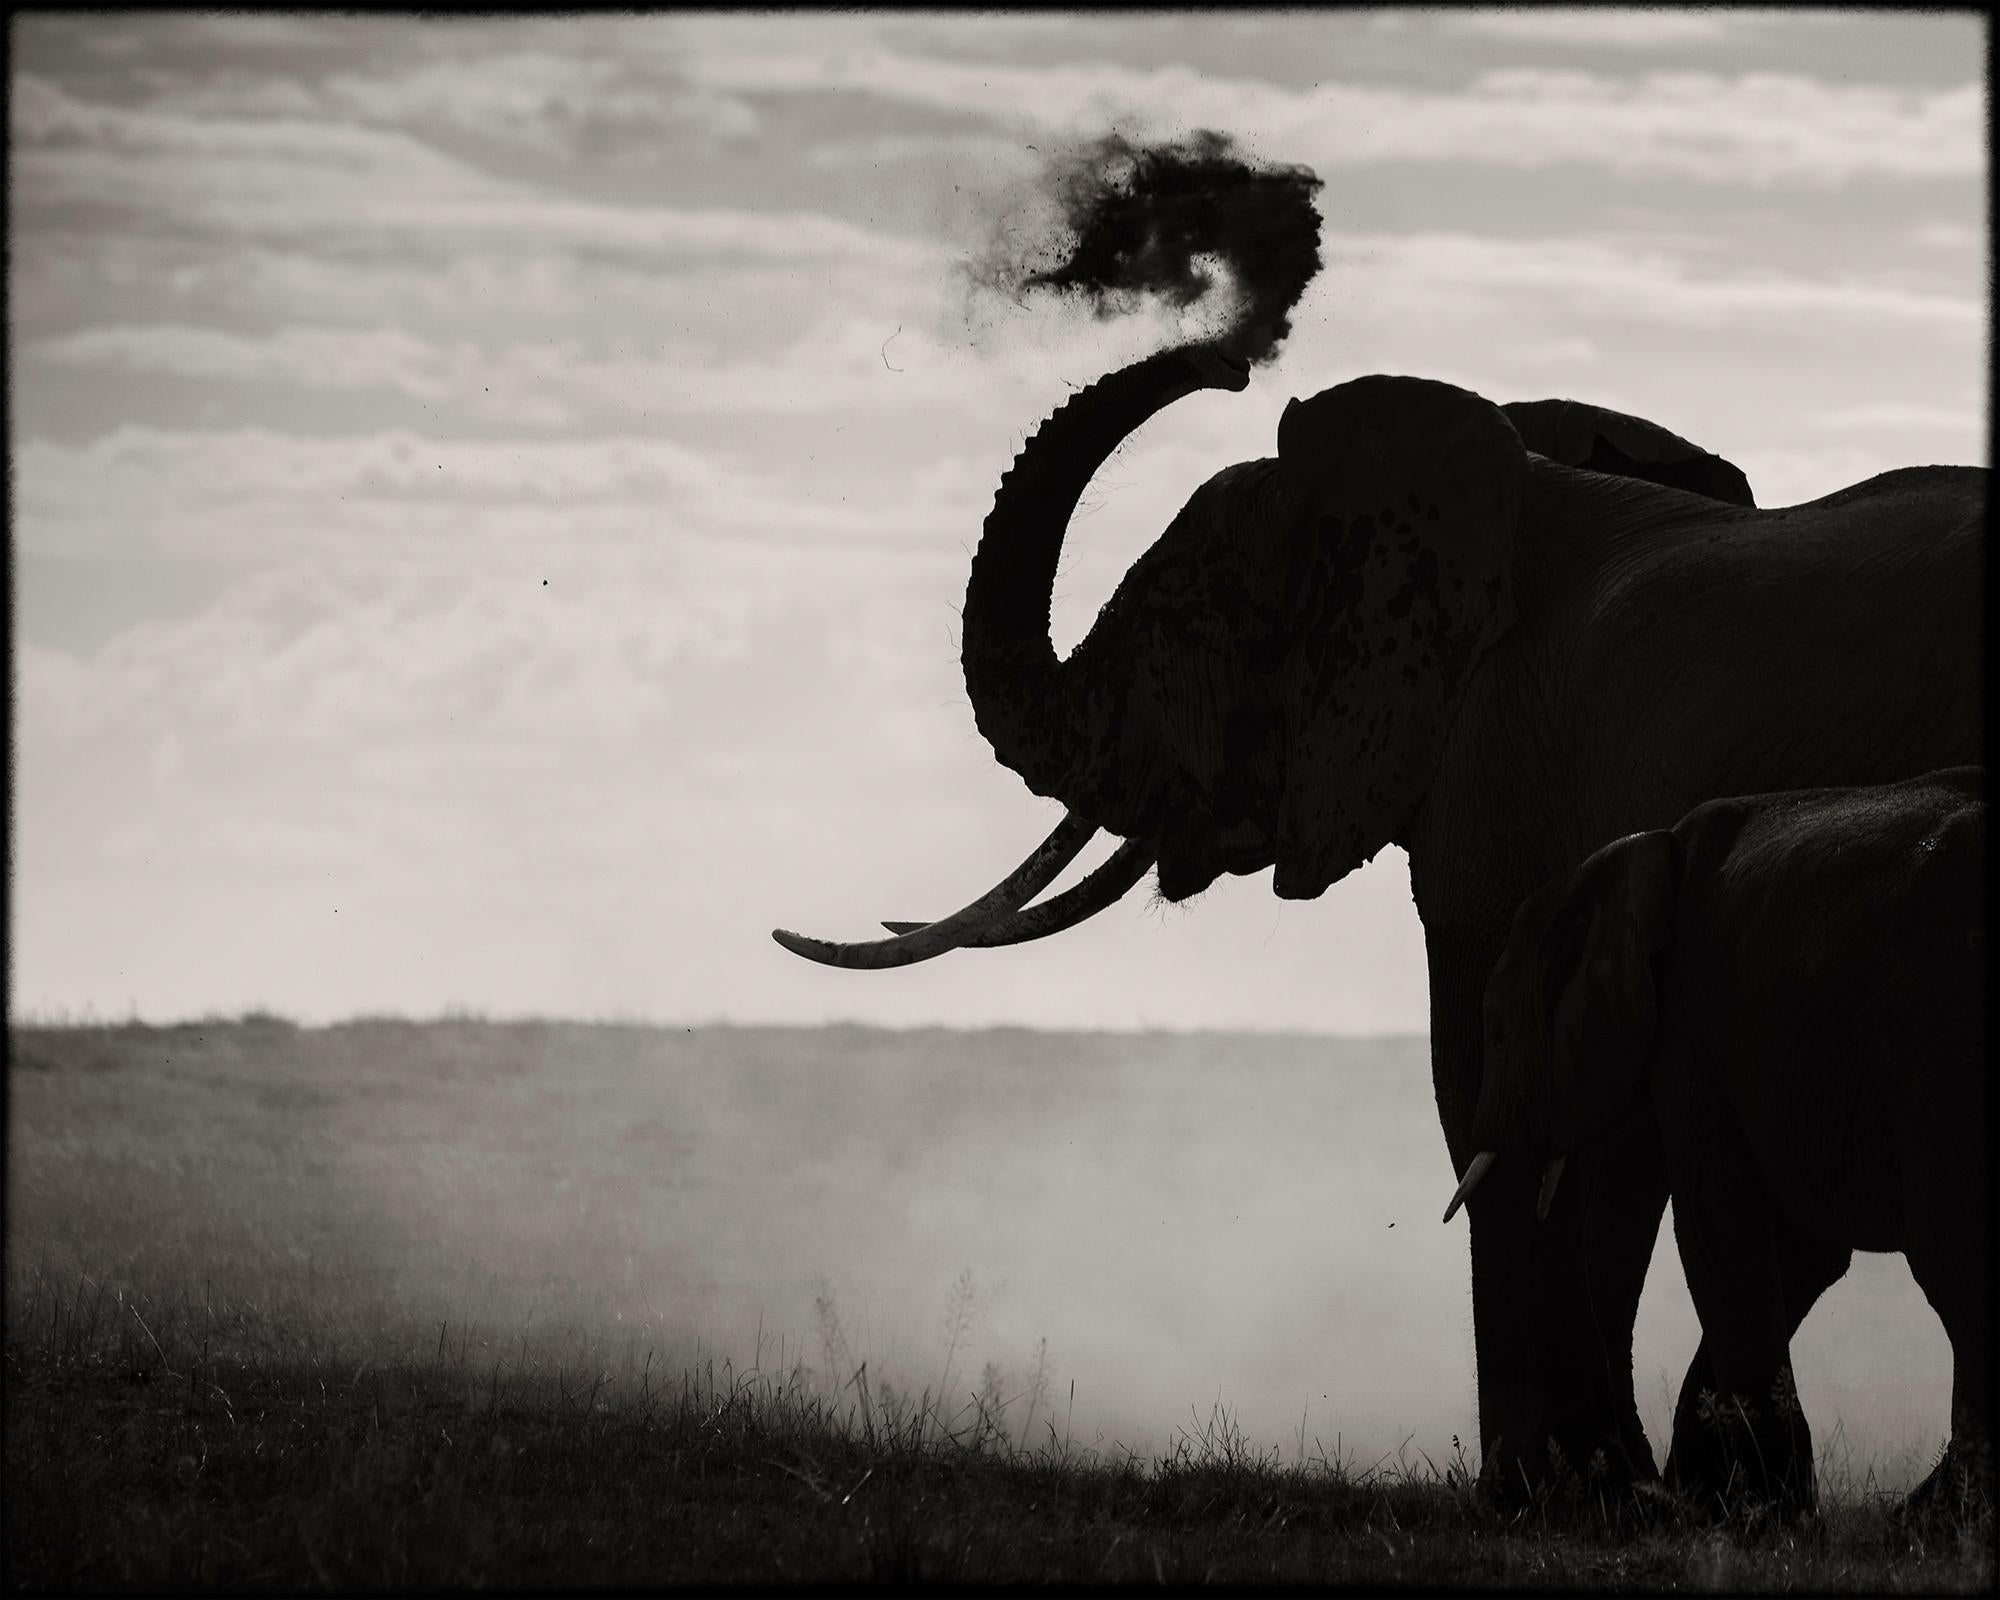 Joachim Schmeisser Landscape Photograph - Eternity #2, Kenya 2019, Elephant, wildlife, Platinum